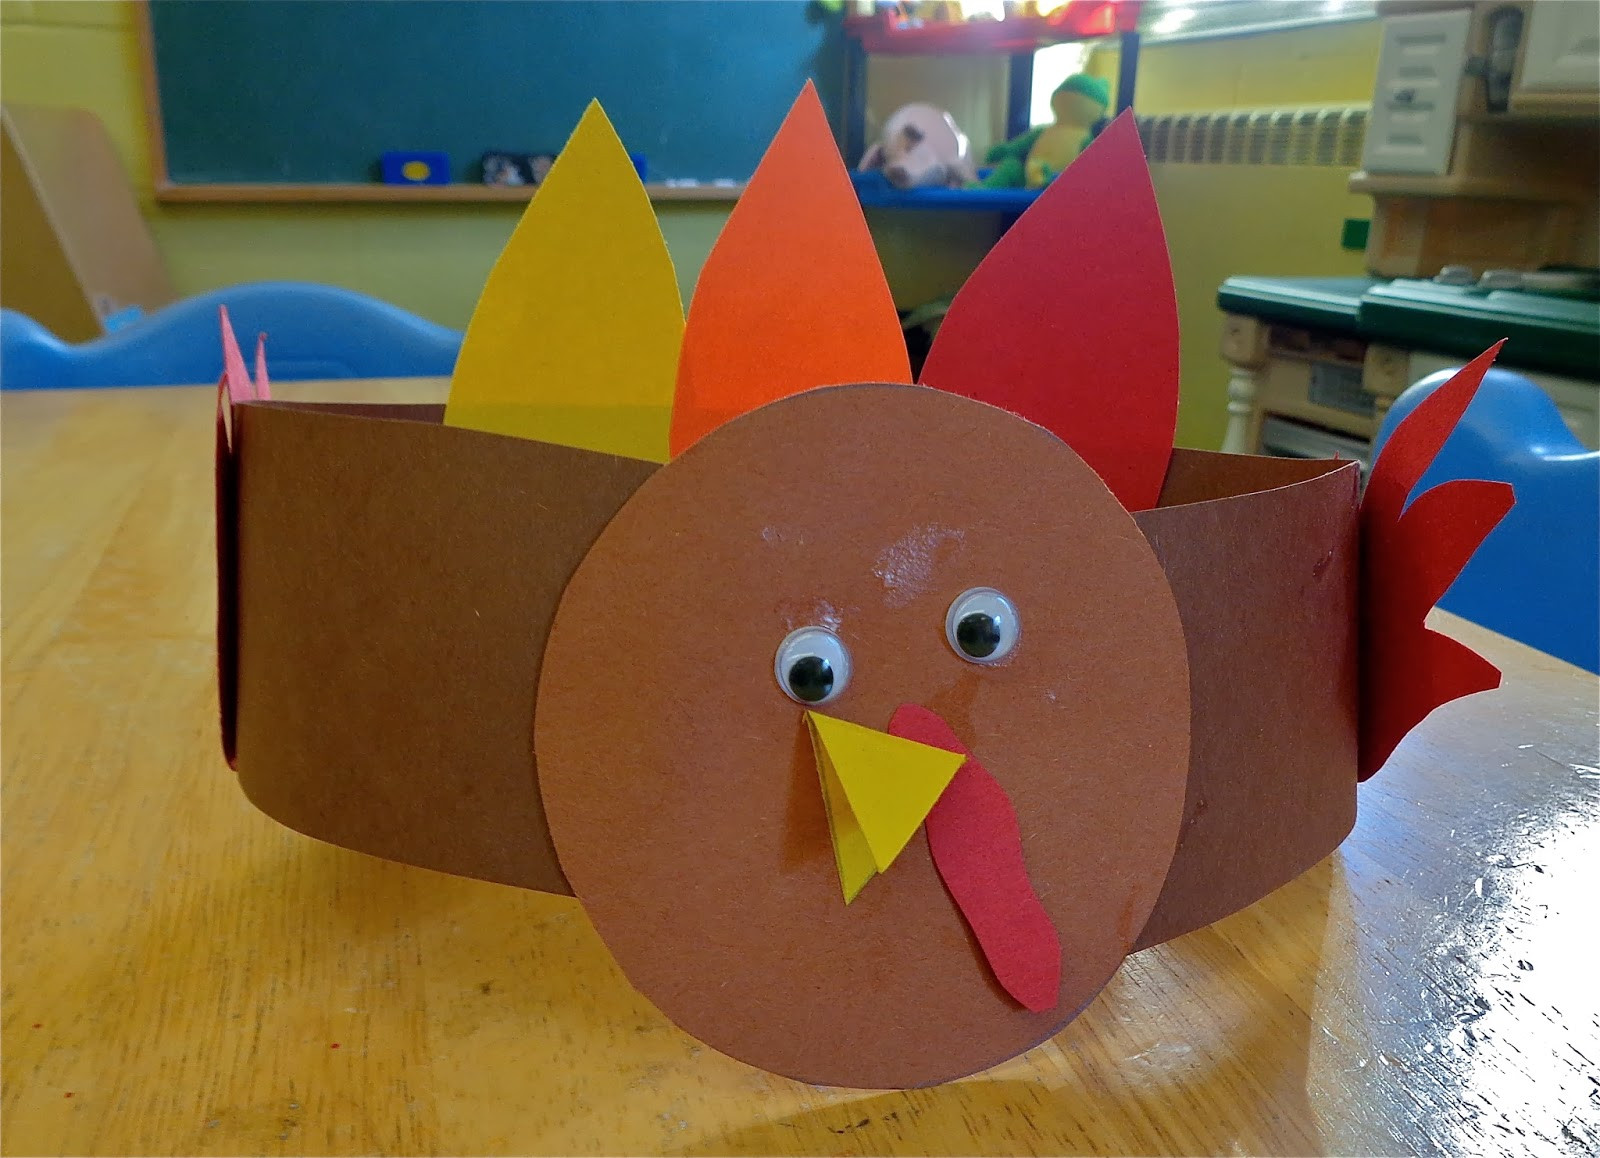 Thanksgiving Preschool Crafts
 Terrific Preschool Years Thanksgiving placemats